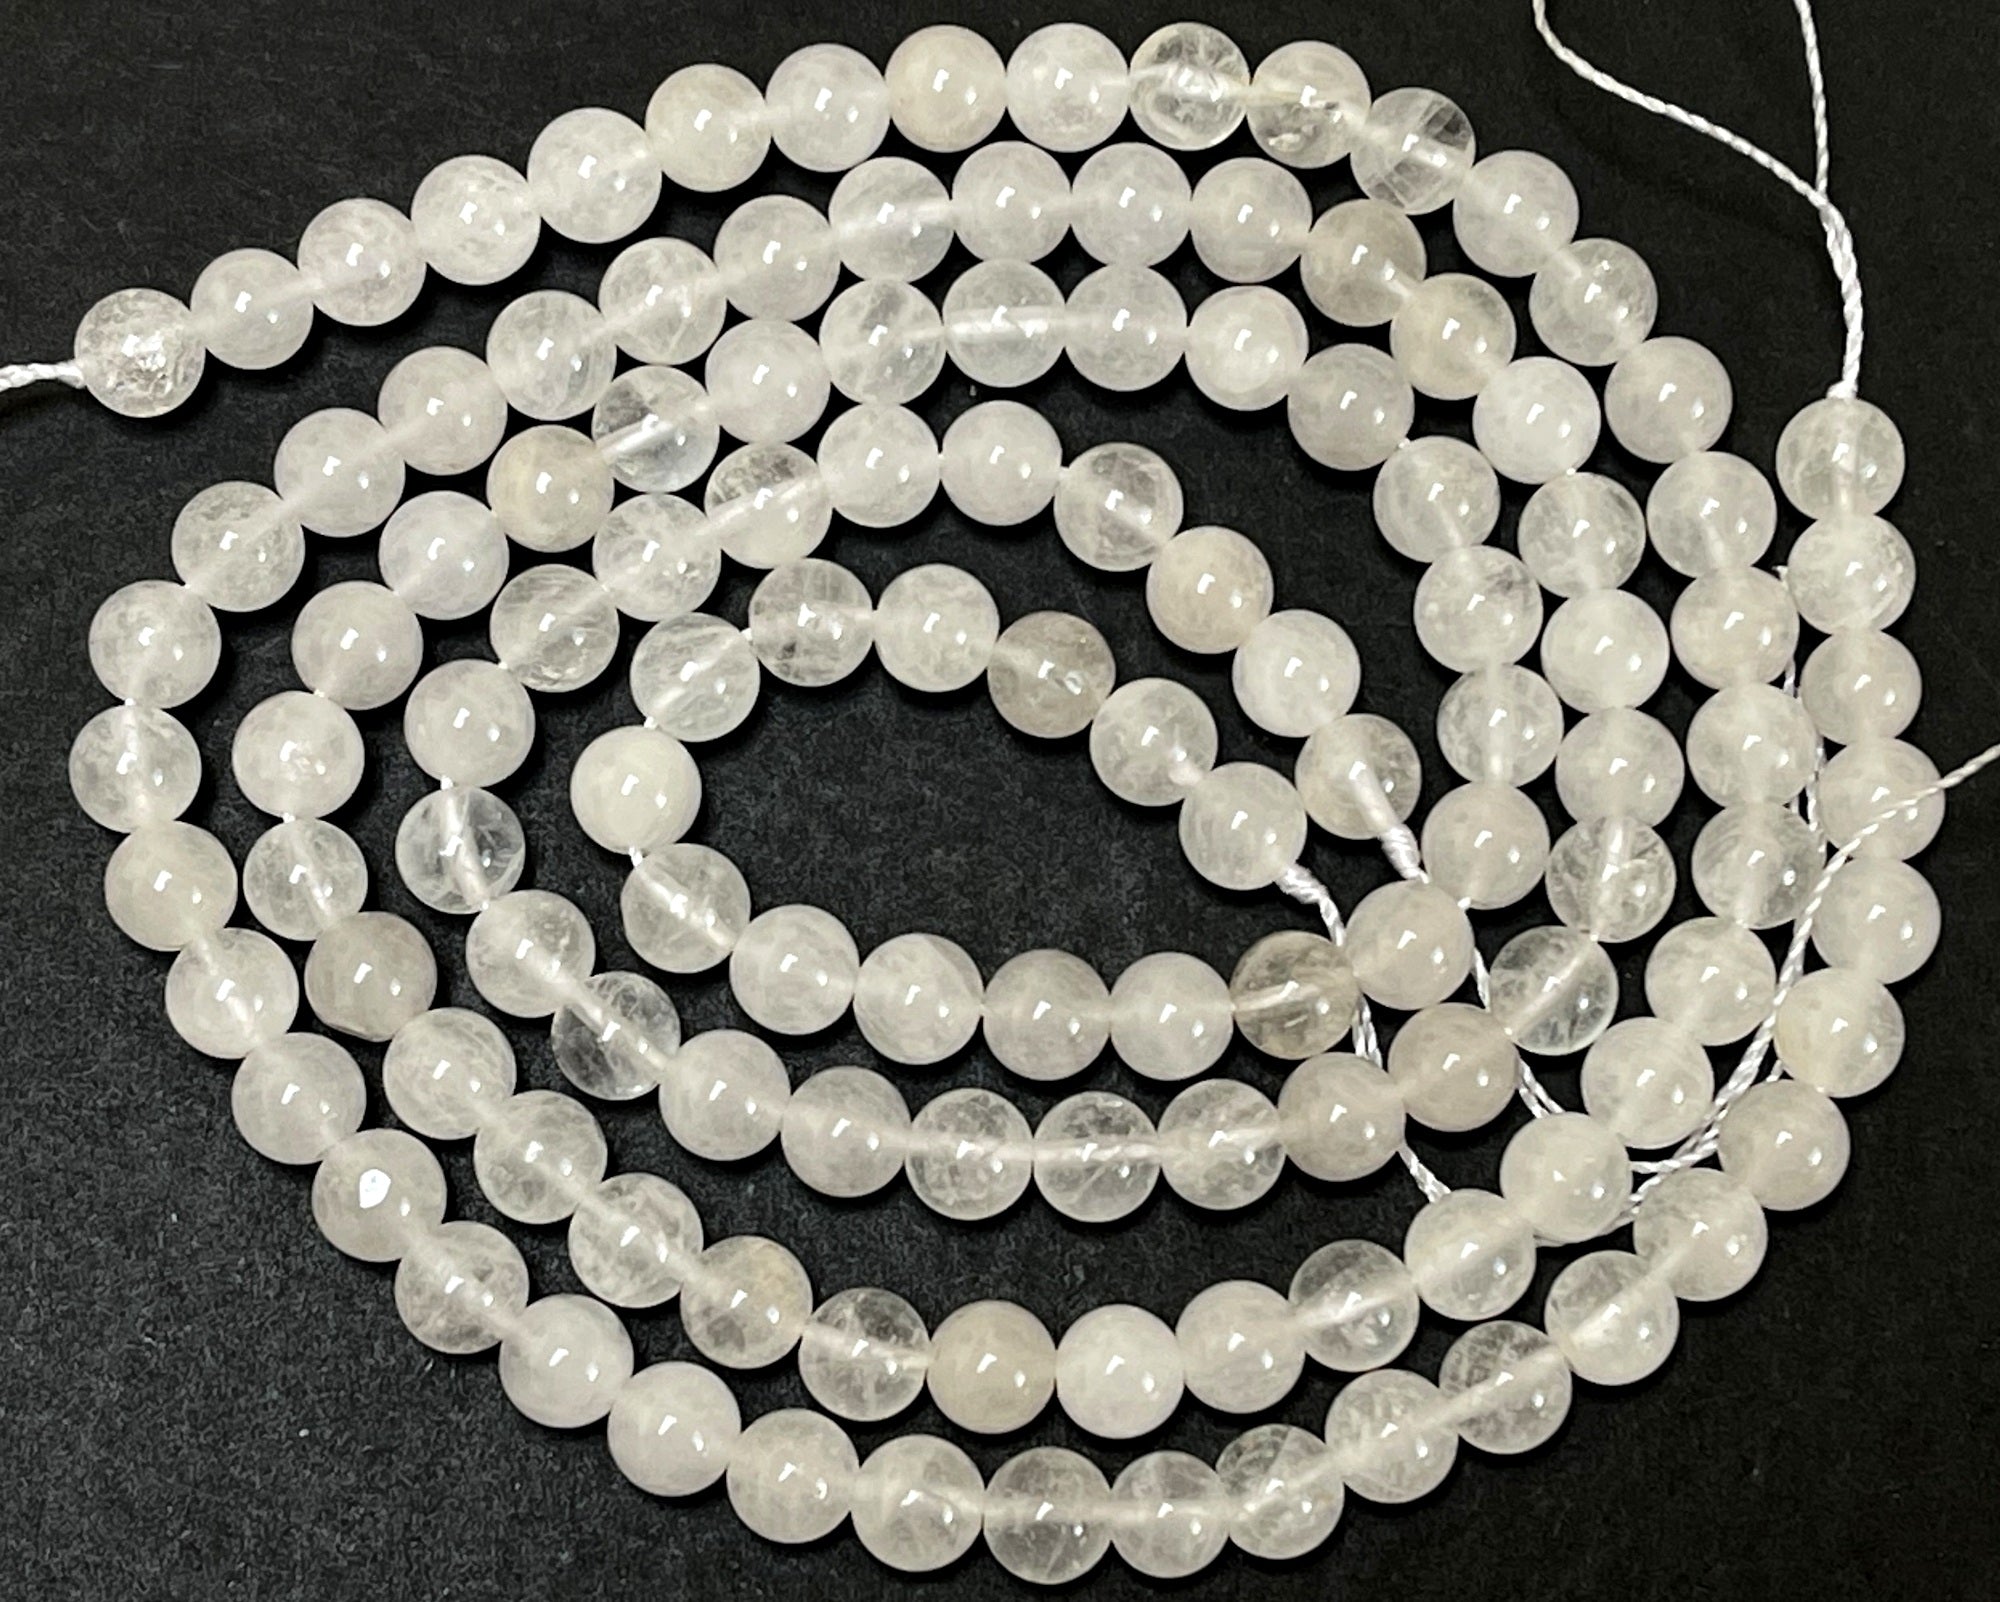 Angola White Quartz 6mm round natural crystal beads 15" strand